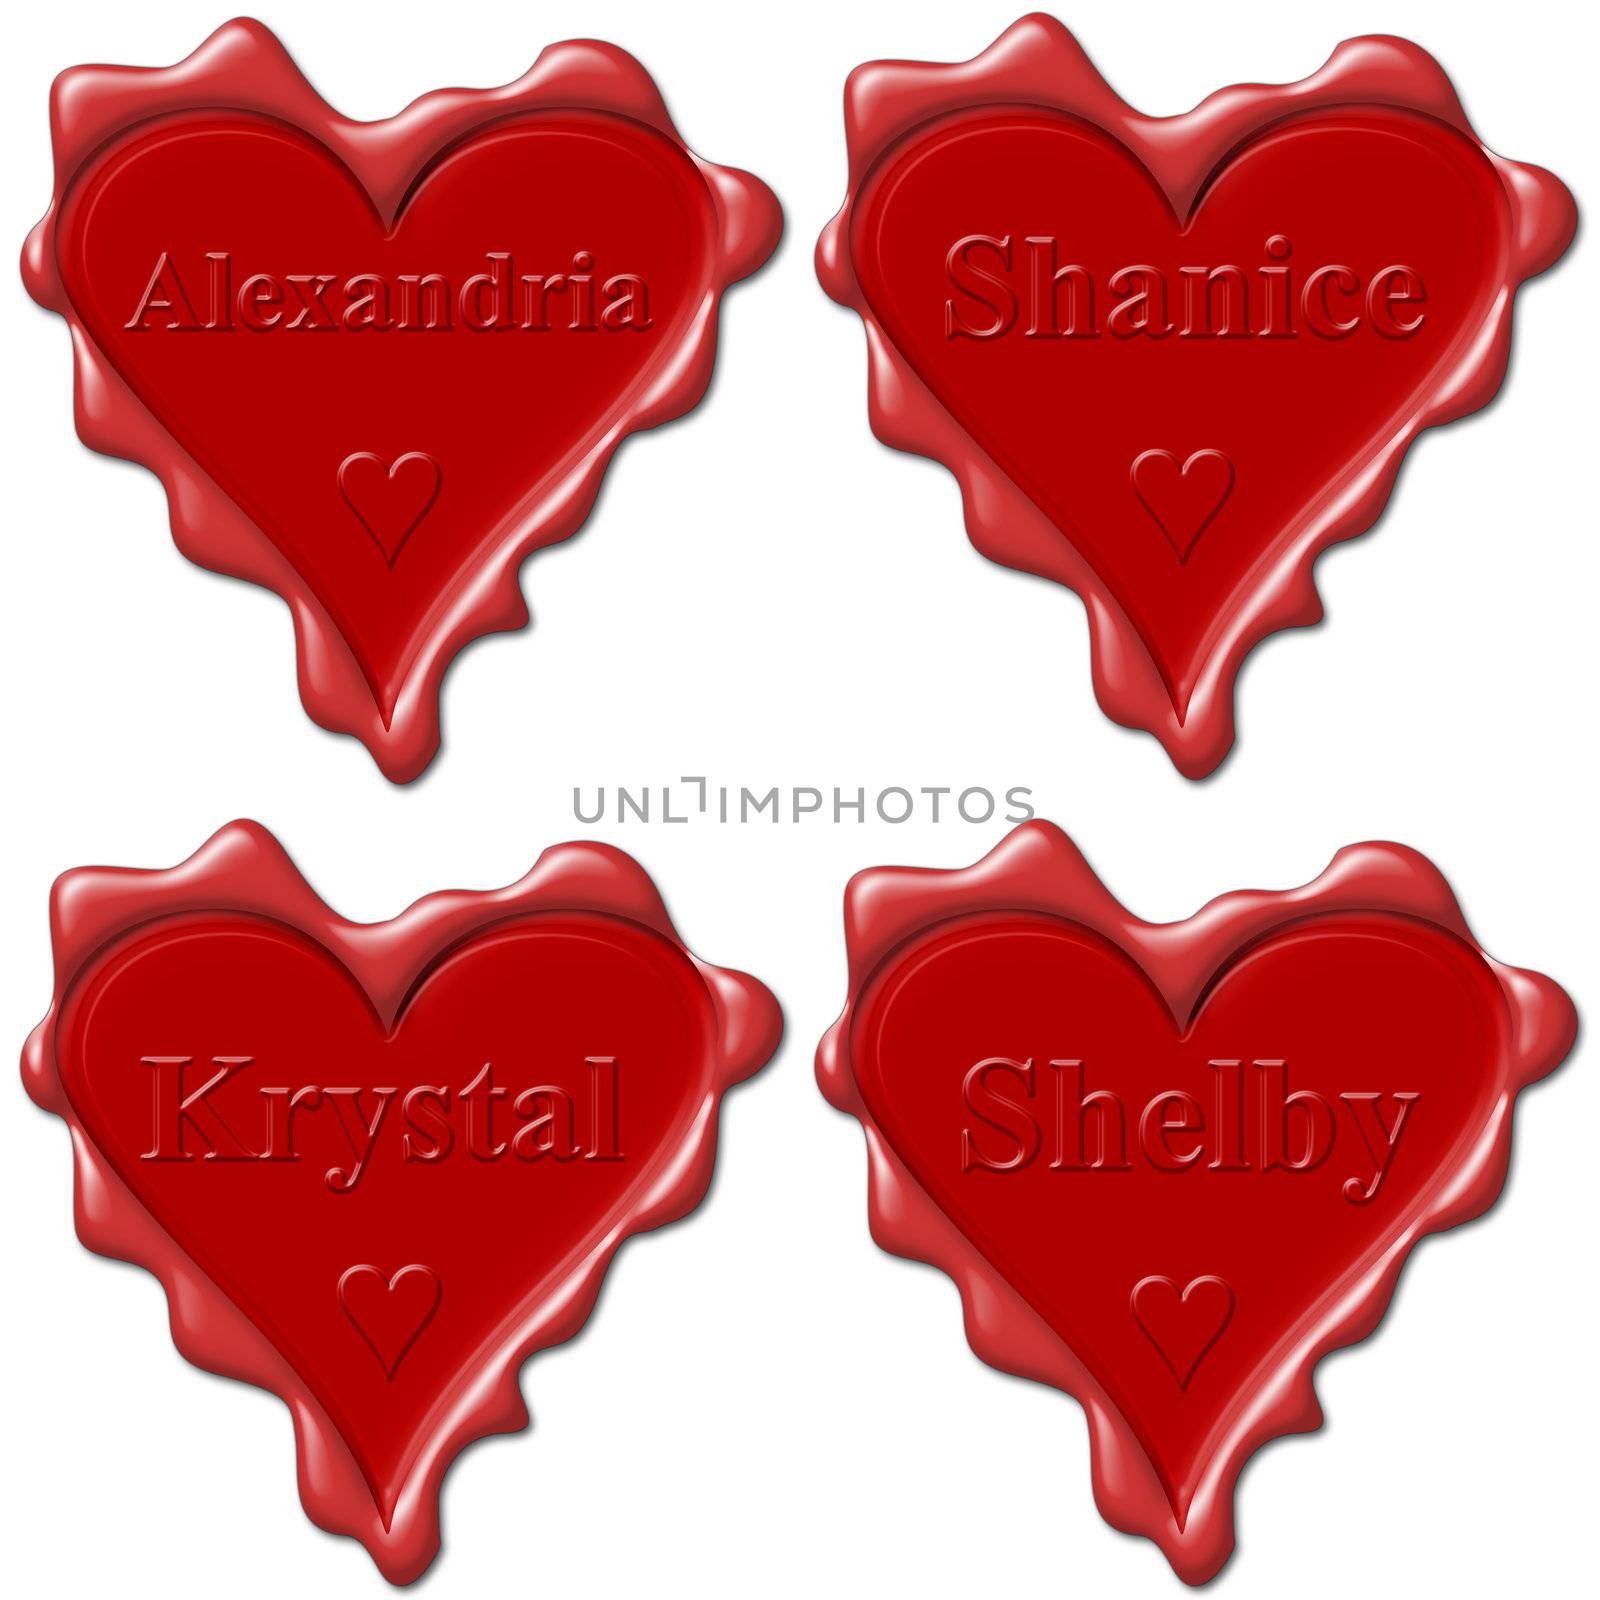 Valentine love hearts with names: Alexandria, Shanice, Krystal,  by mozzyb